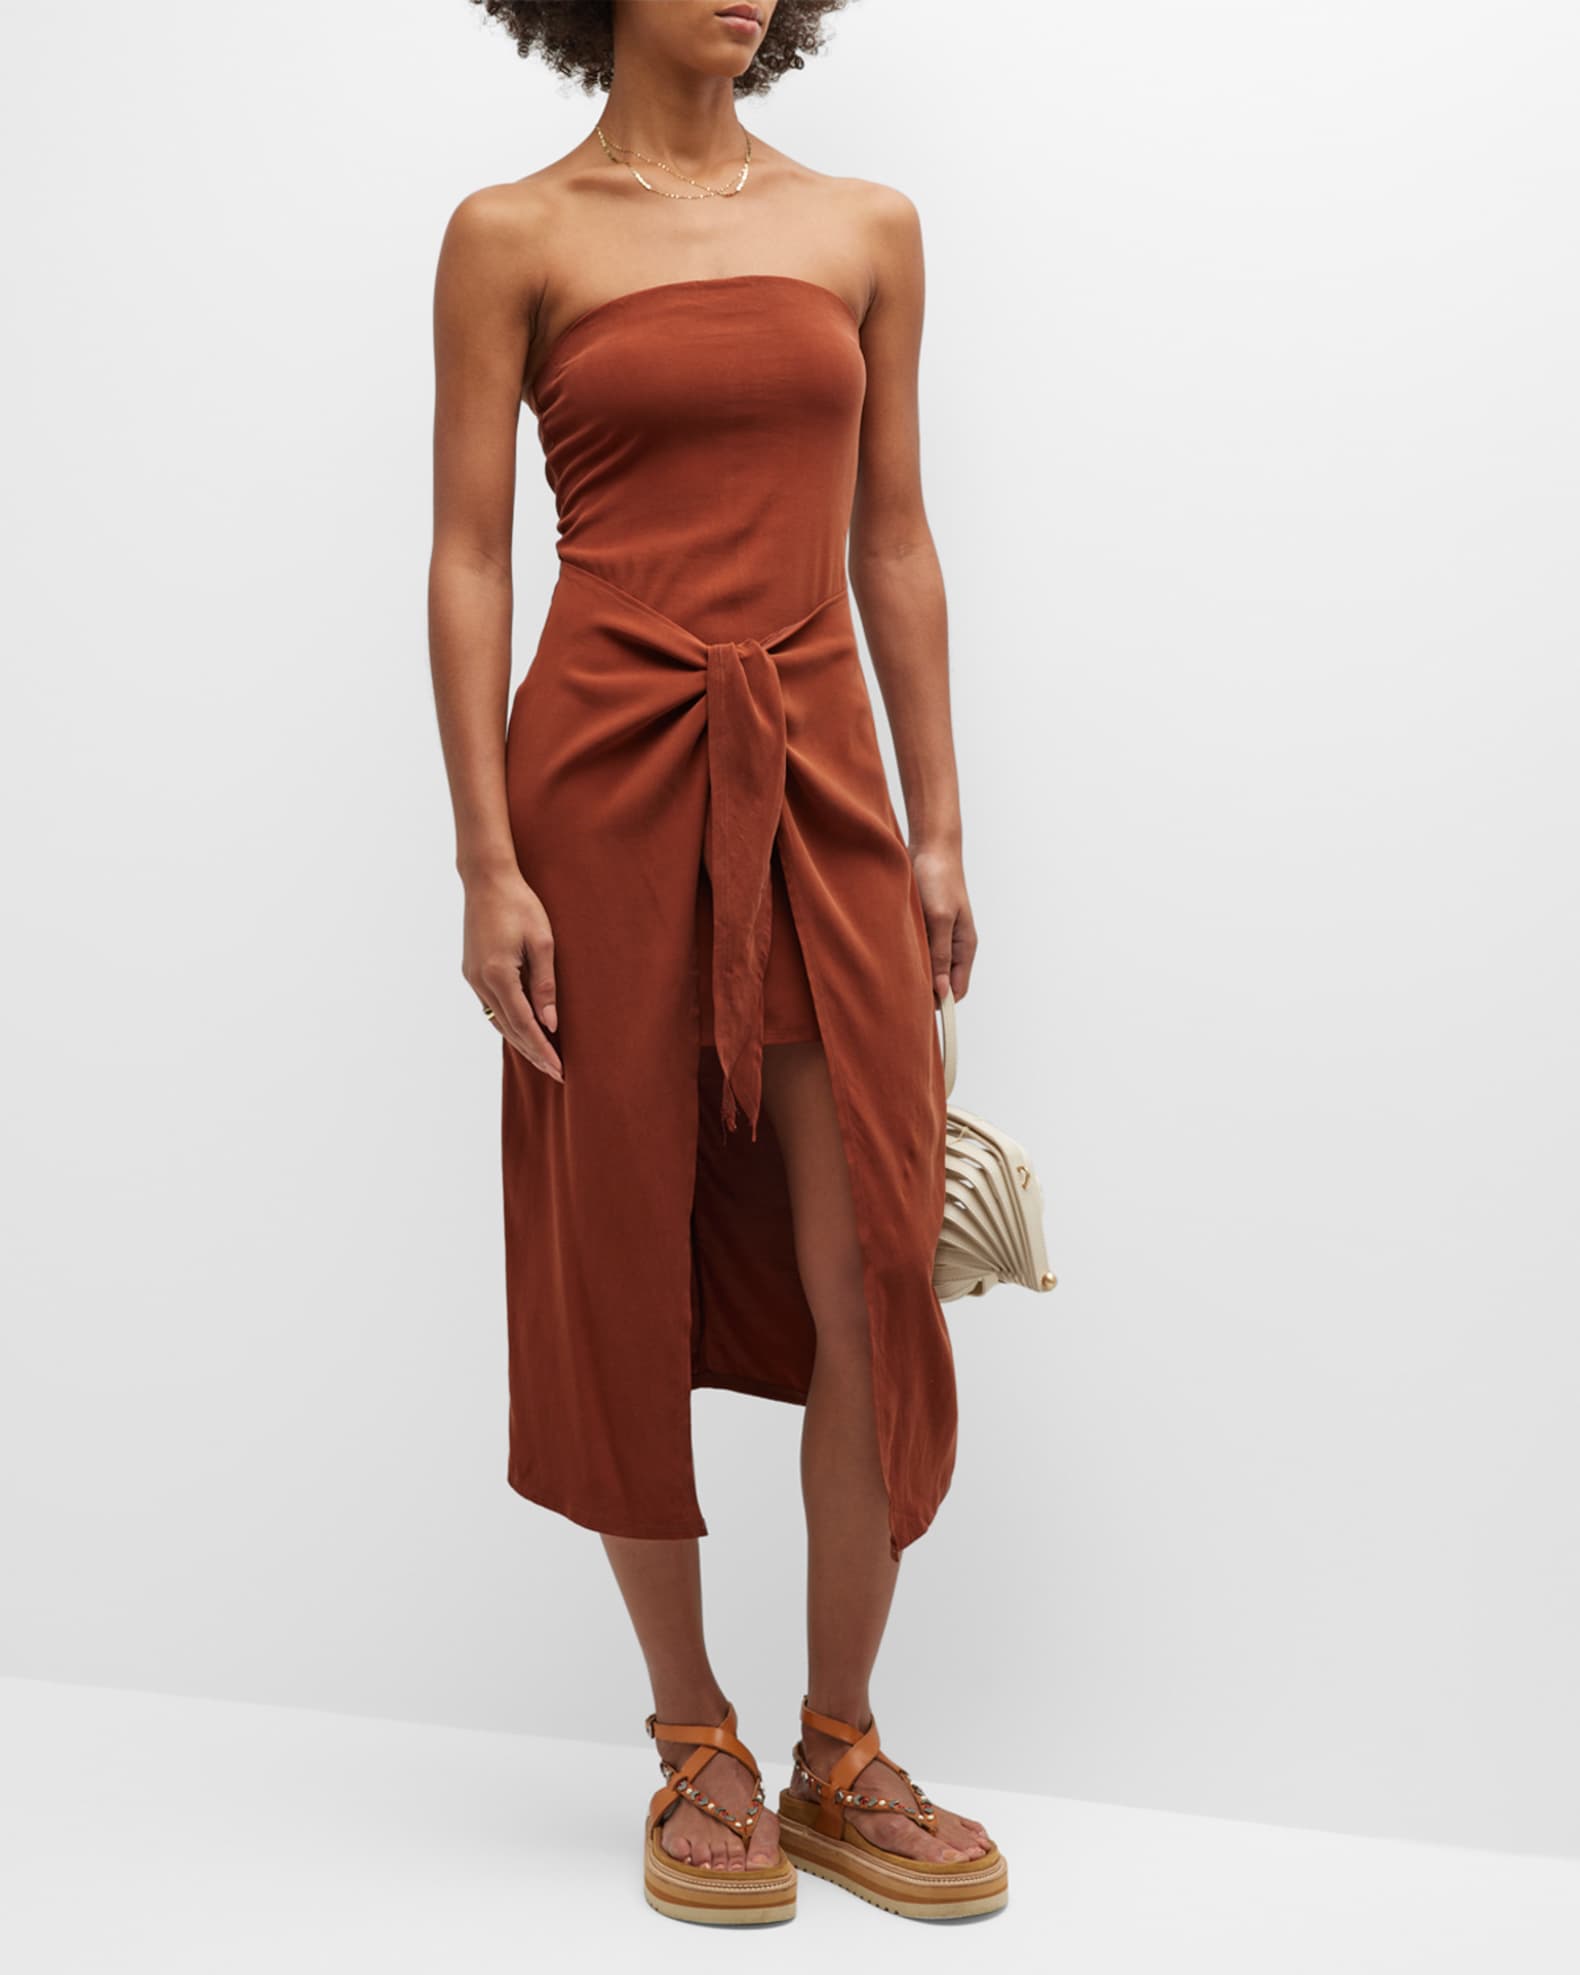 The Anna Midi in Malibu aka, the perfect strapless slip dress 💯 😍  #resaxjojo #resamalibu #annaslipdress